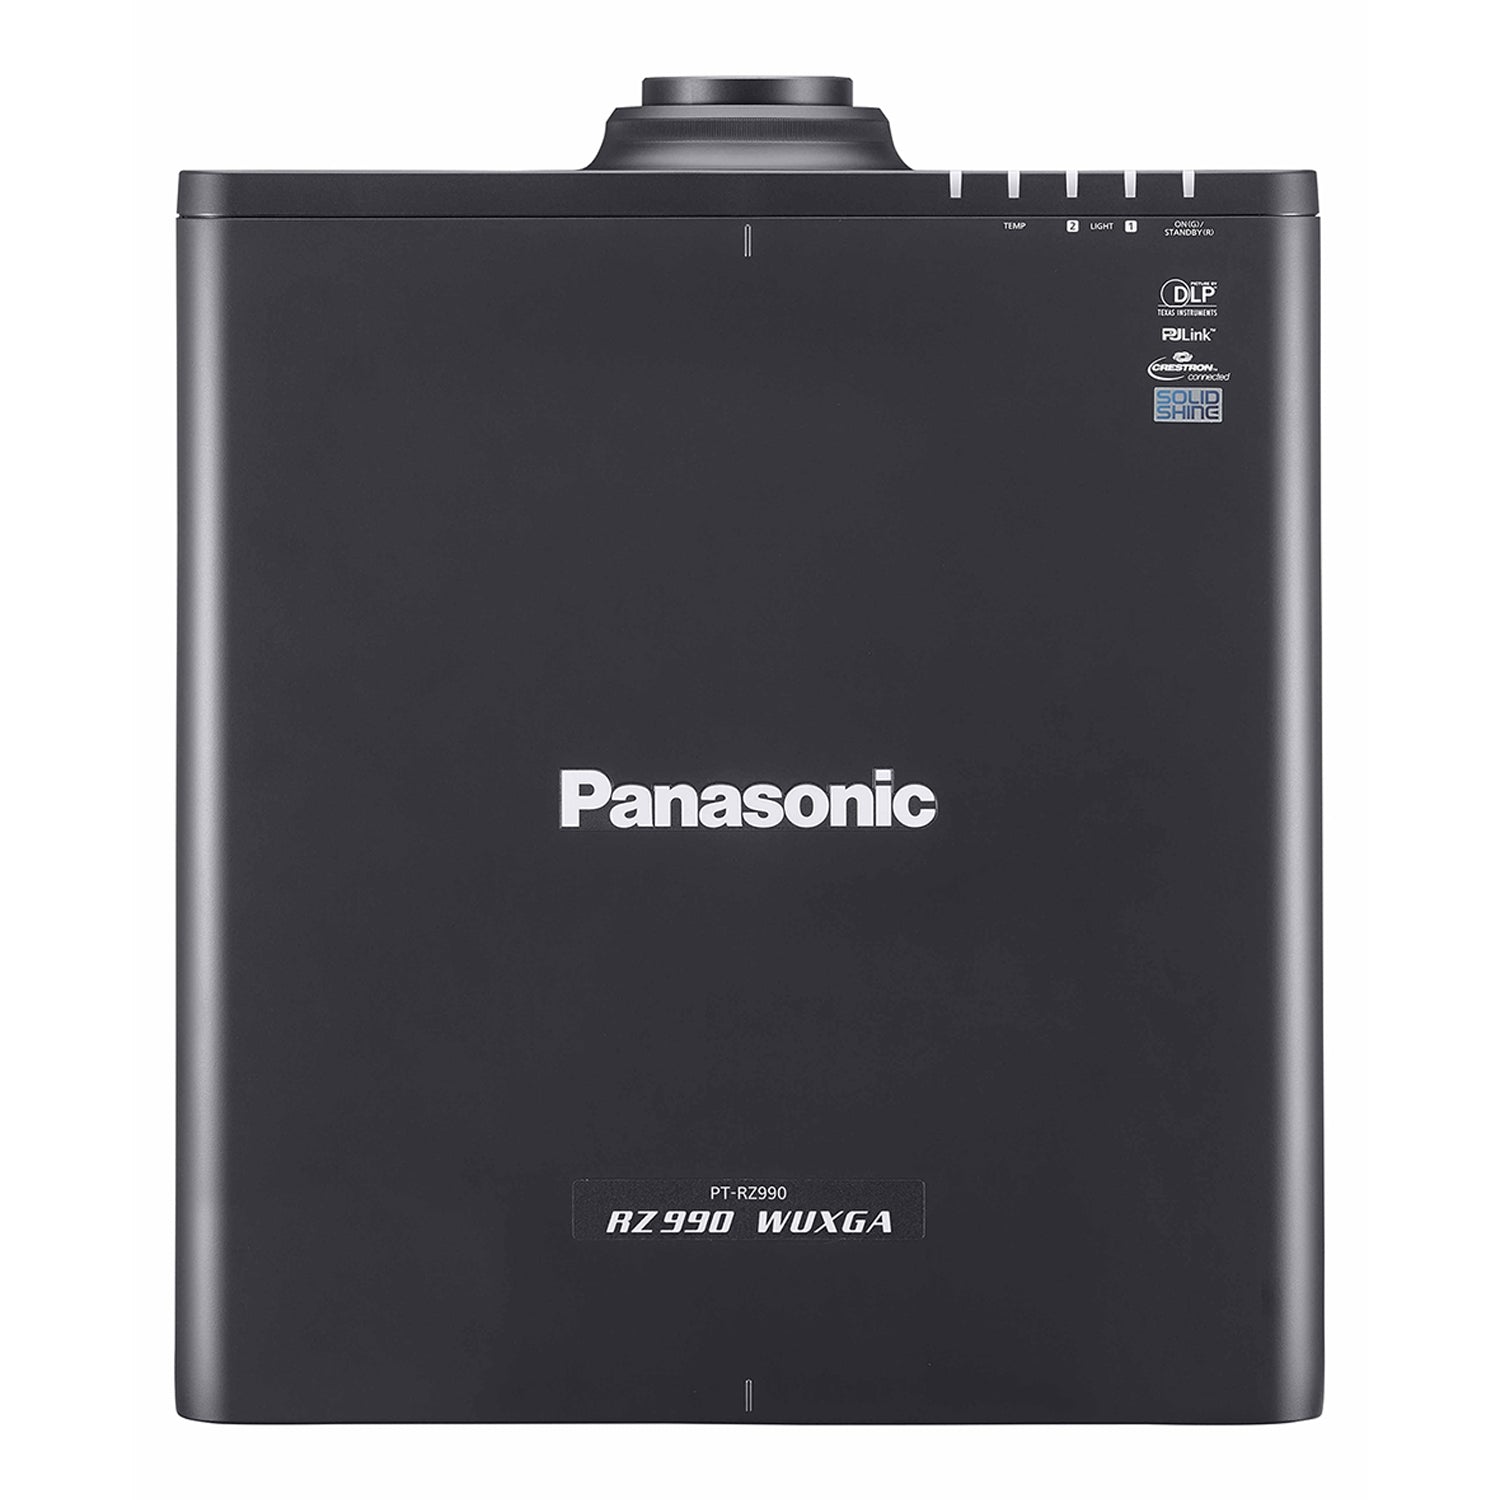 Panasonic PT-RZ990 10,000 Lumen DLP Projector